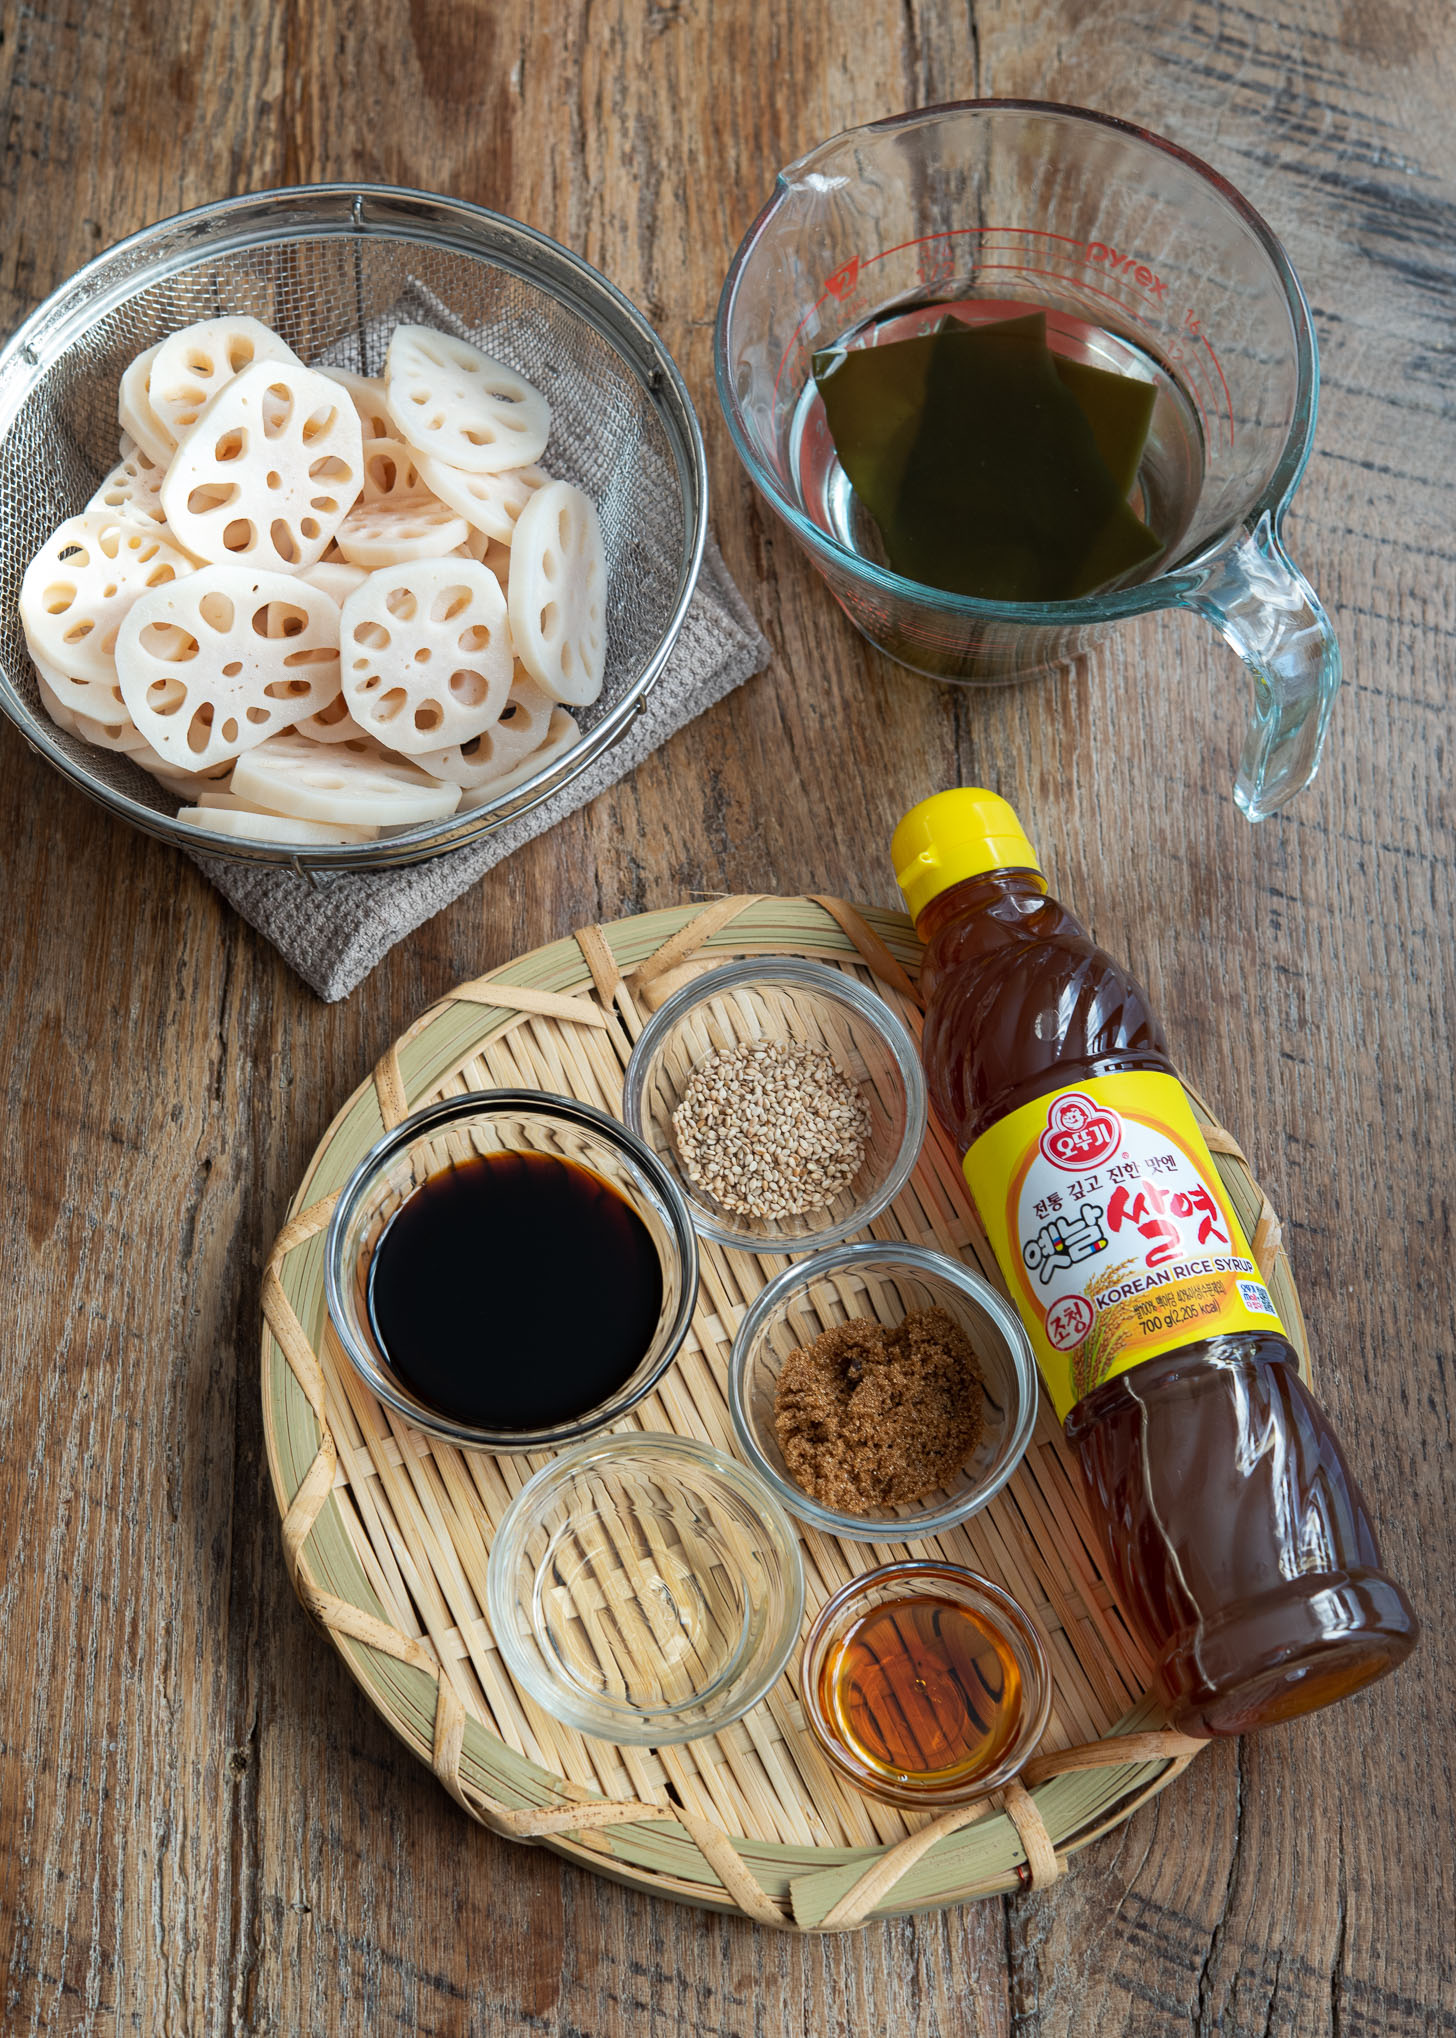 Ingredients for making Korean braised lotus root recipe are presented.